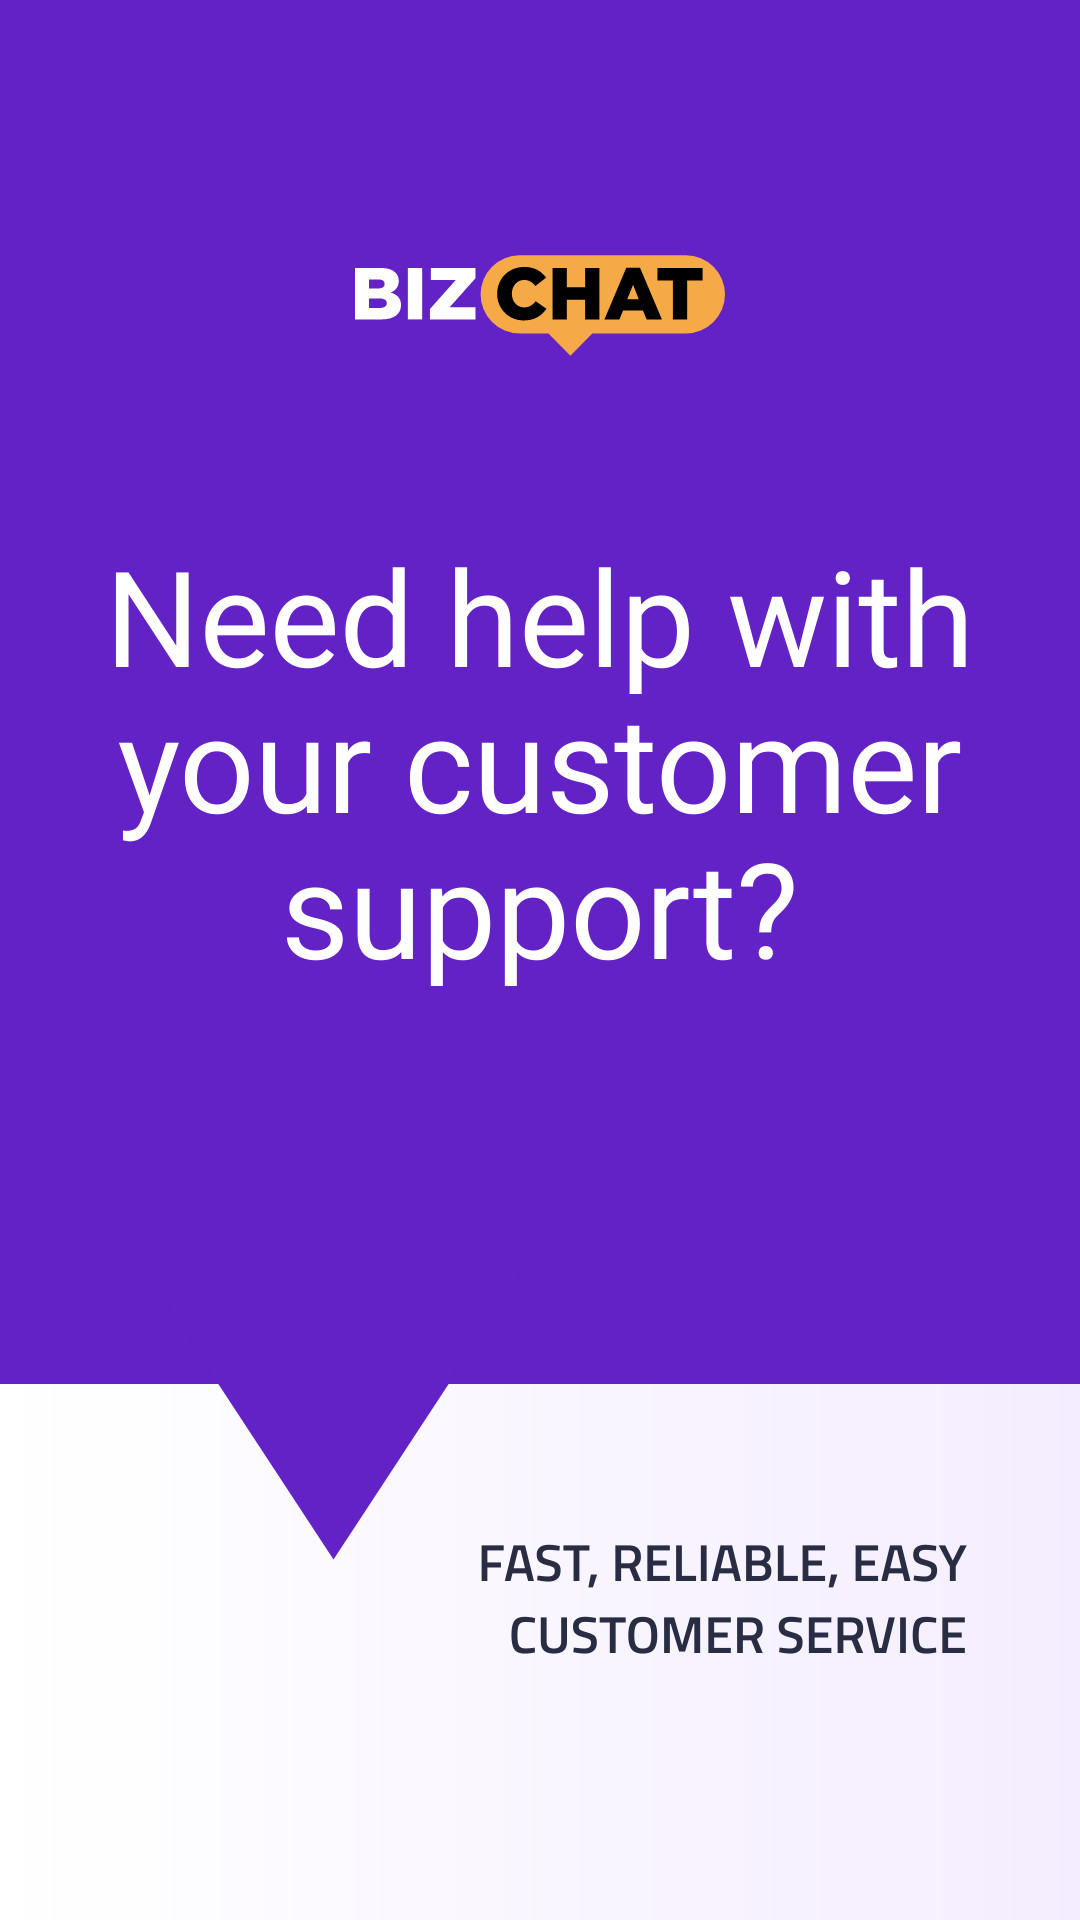 BizChat Need Customer Support